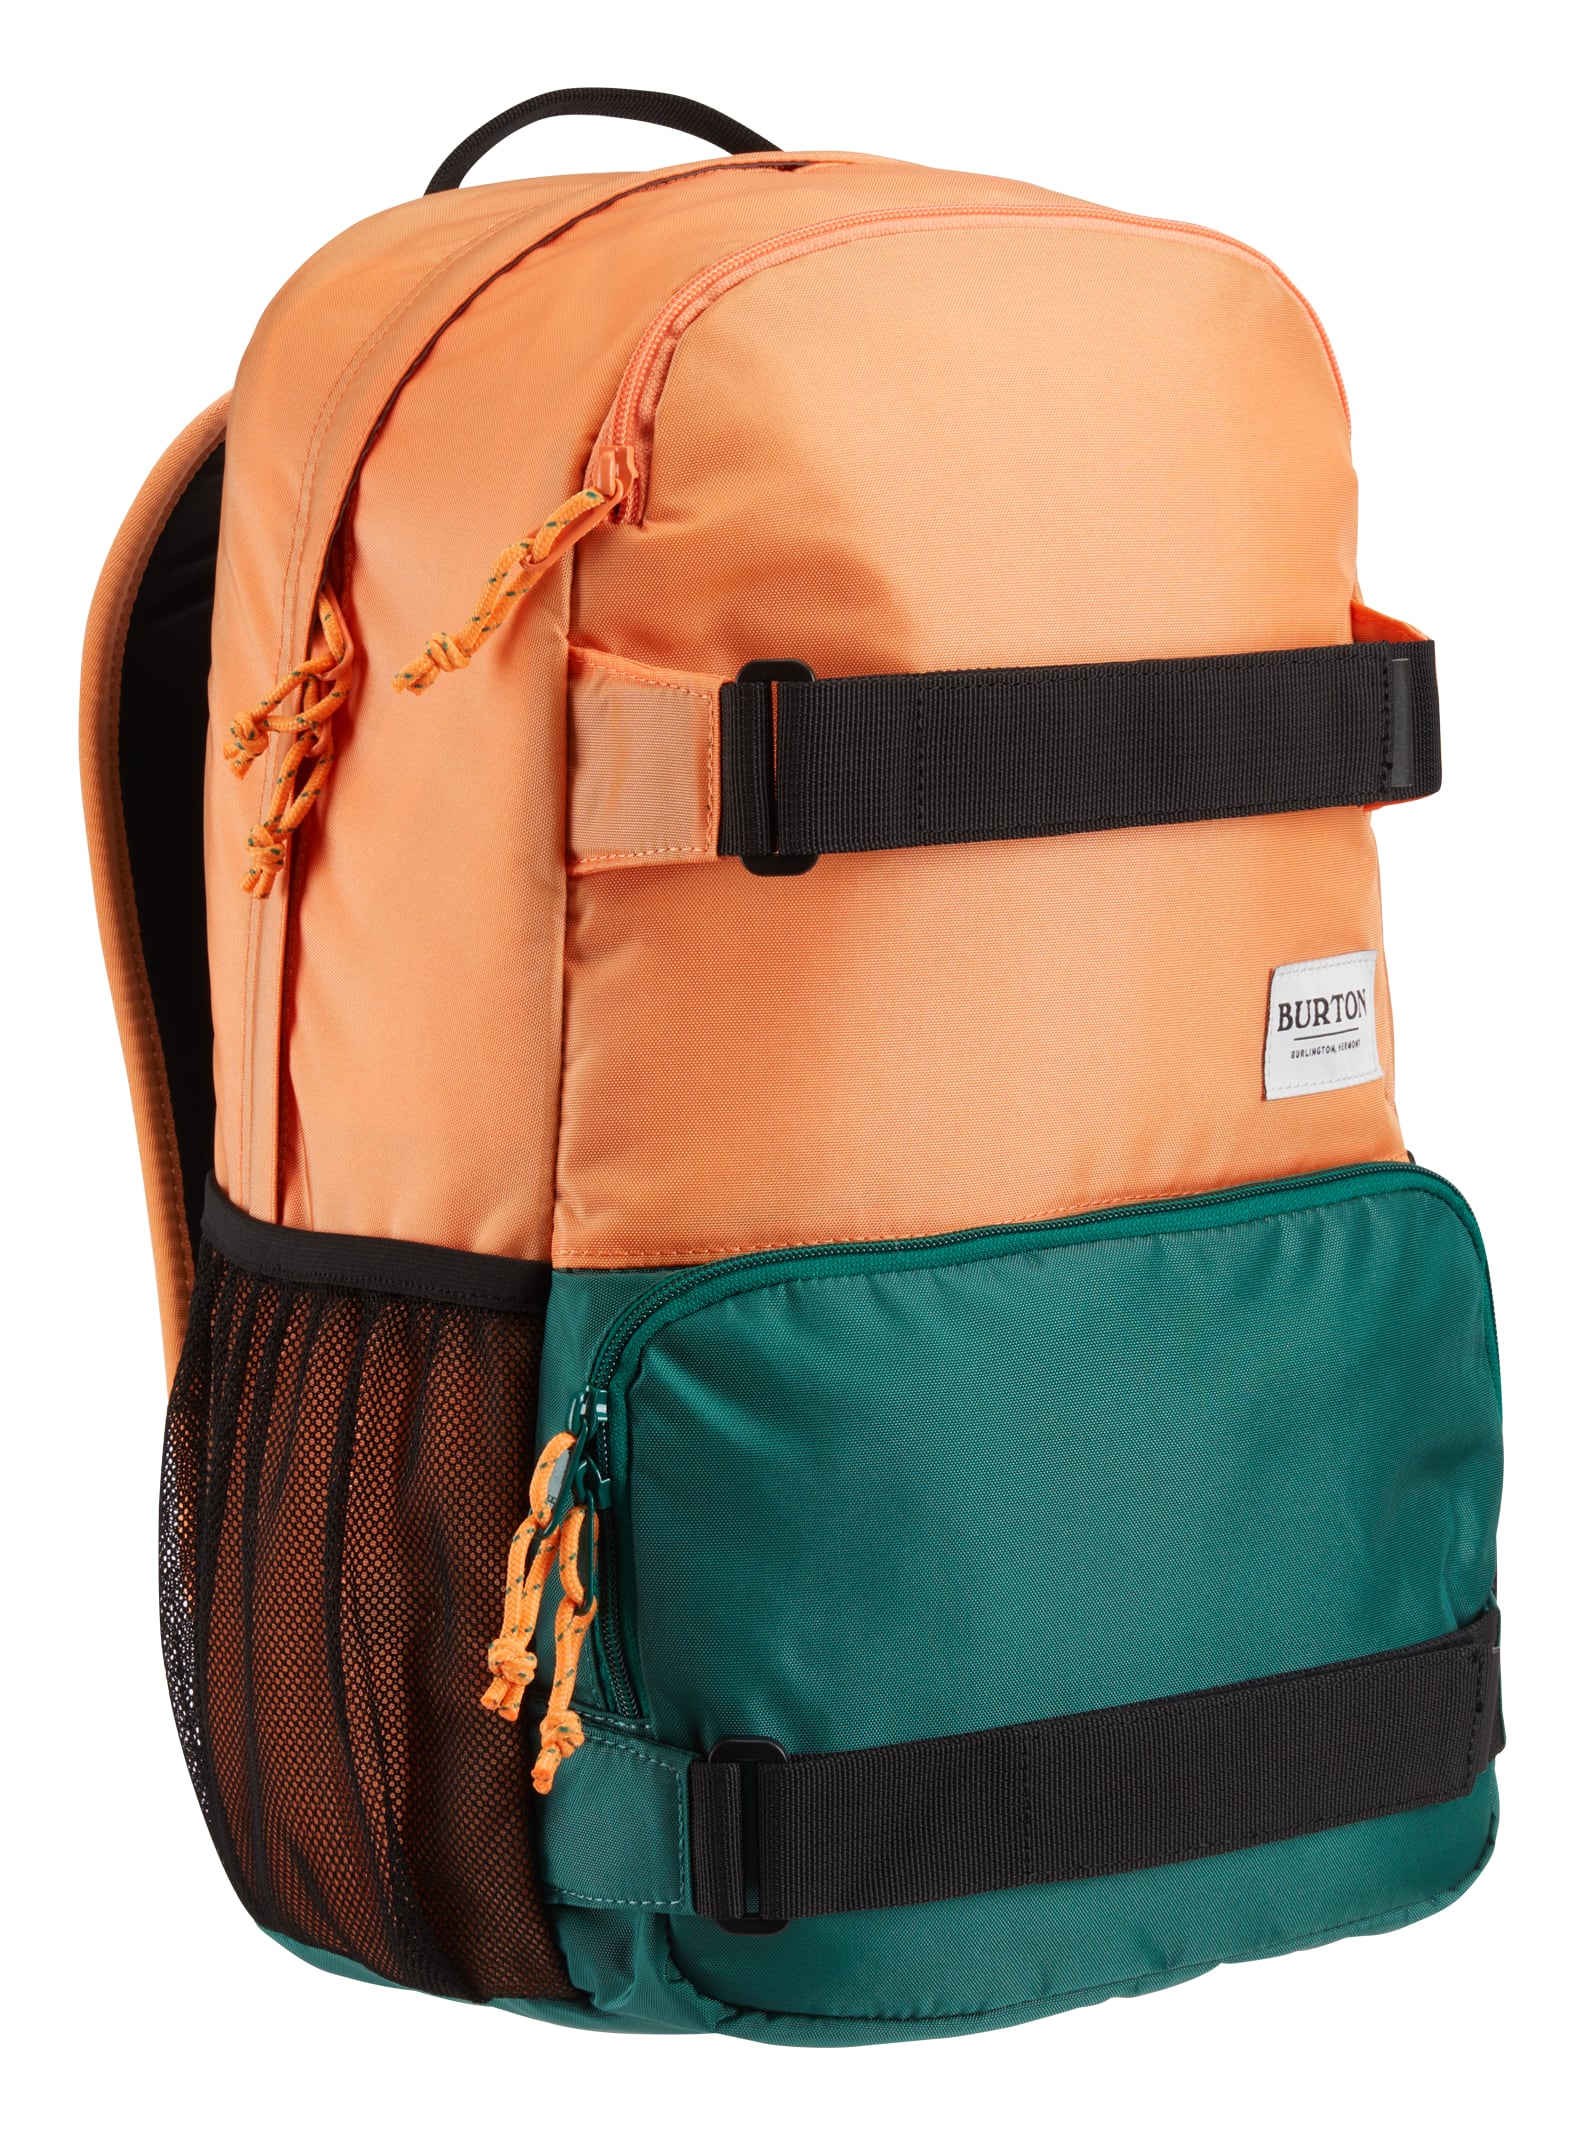 Burton Treble Yell 21L Backpack | Burton.com Spring 2021 GR